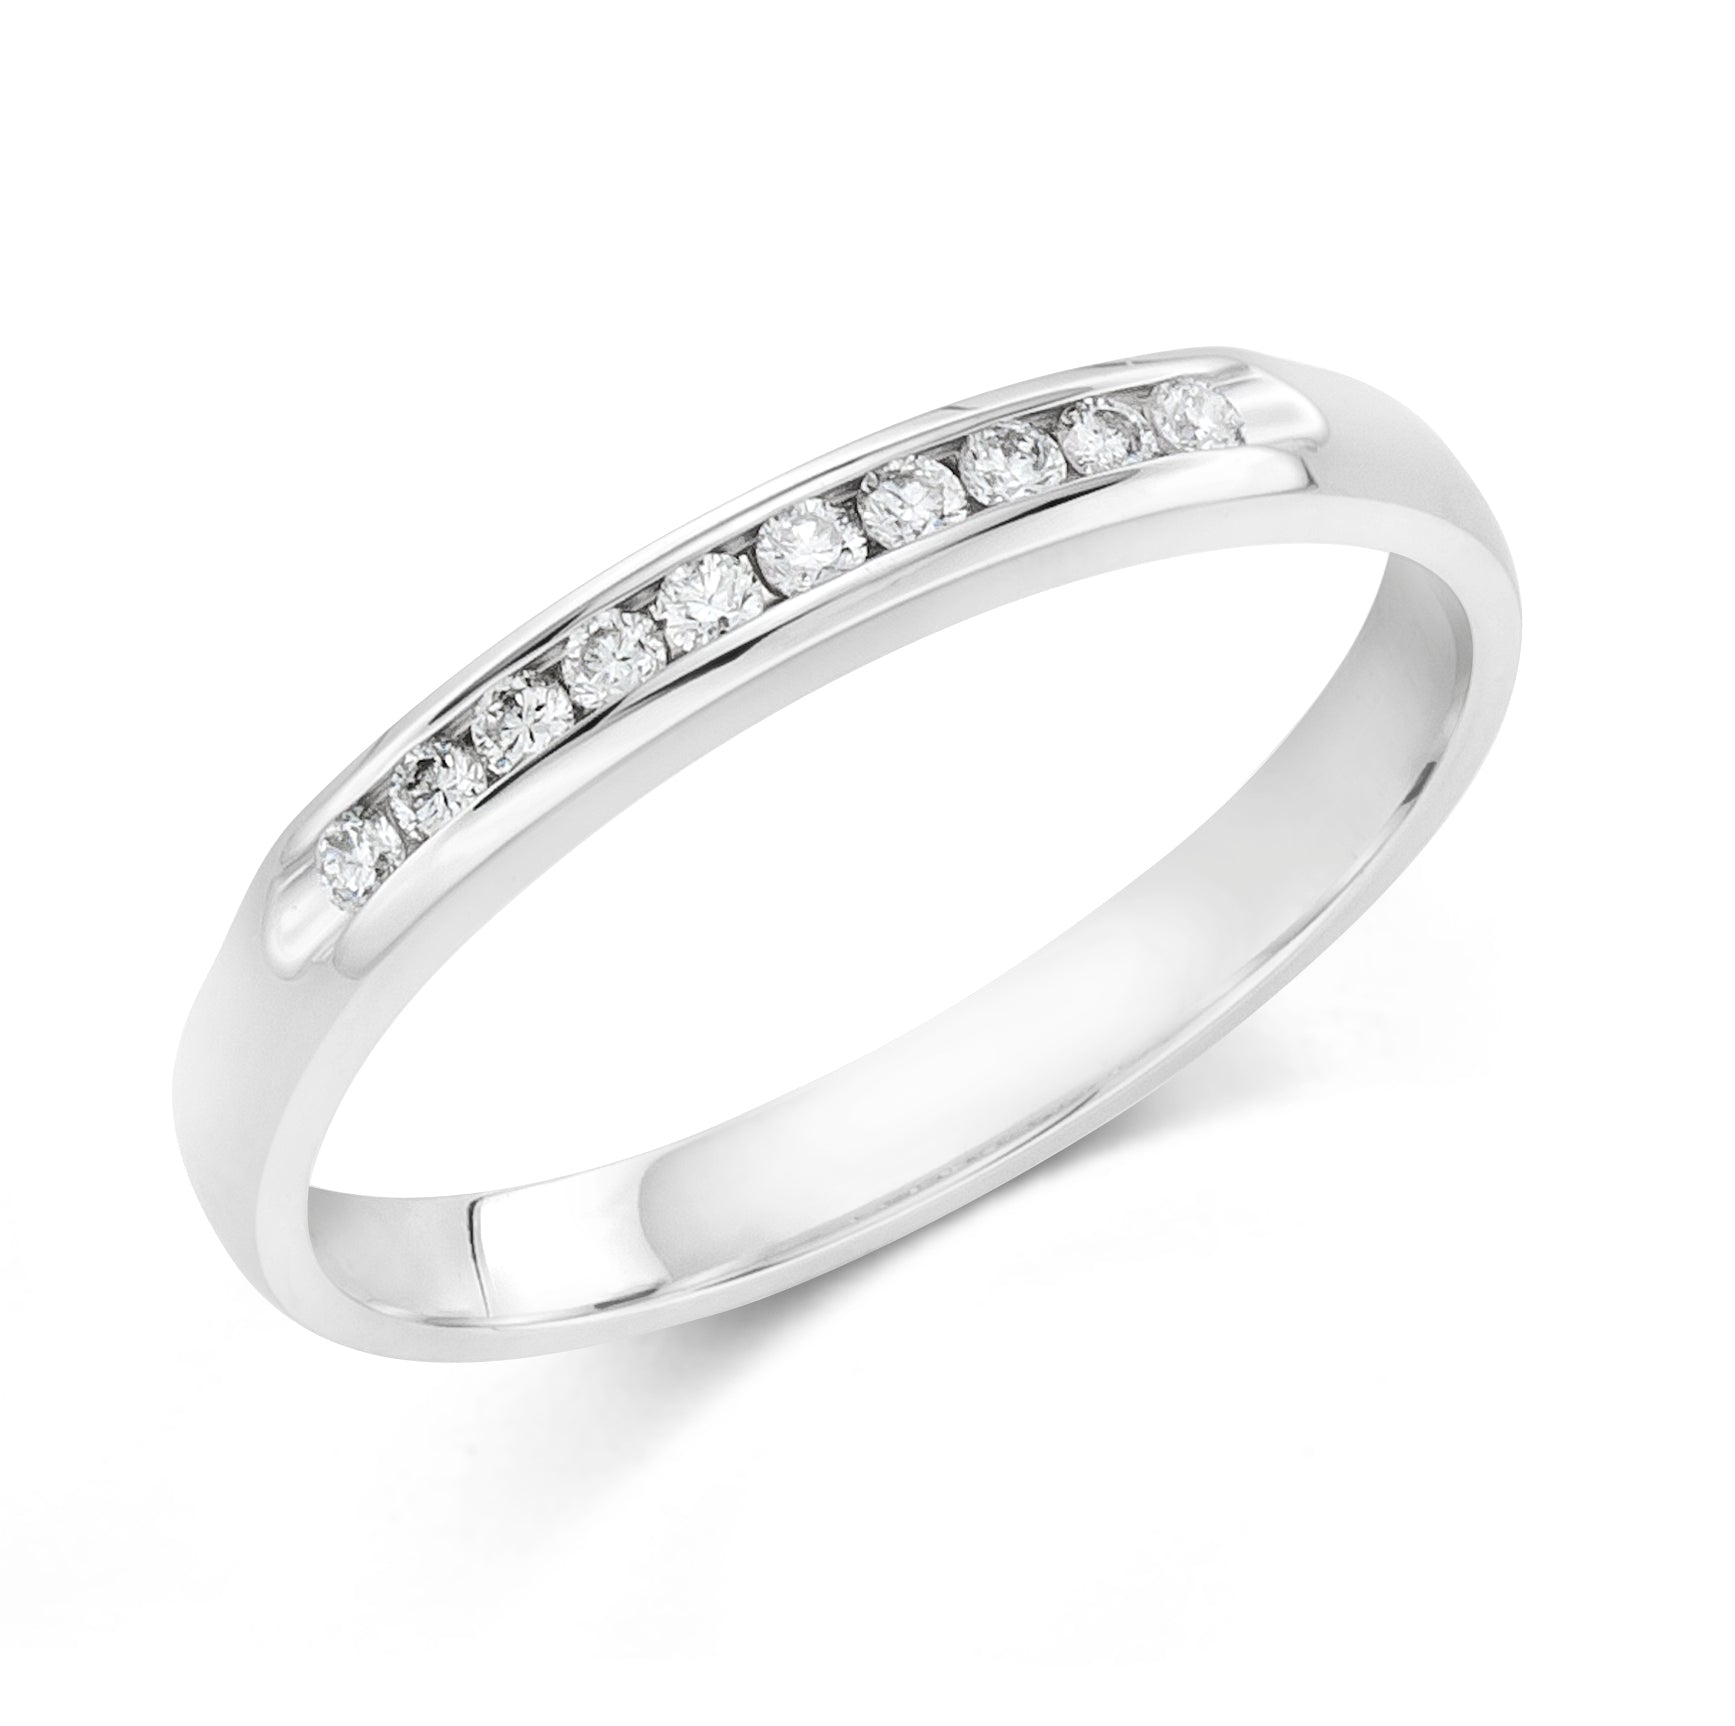 14k White Gold Channel Set Diamond Anniversary Ring